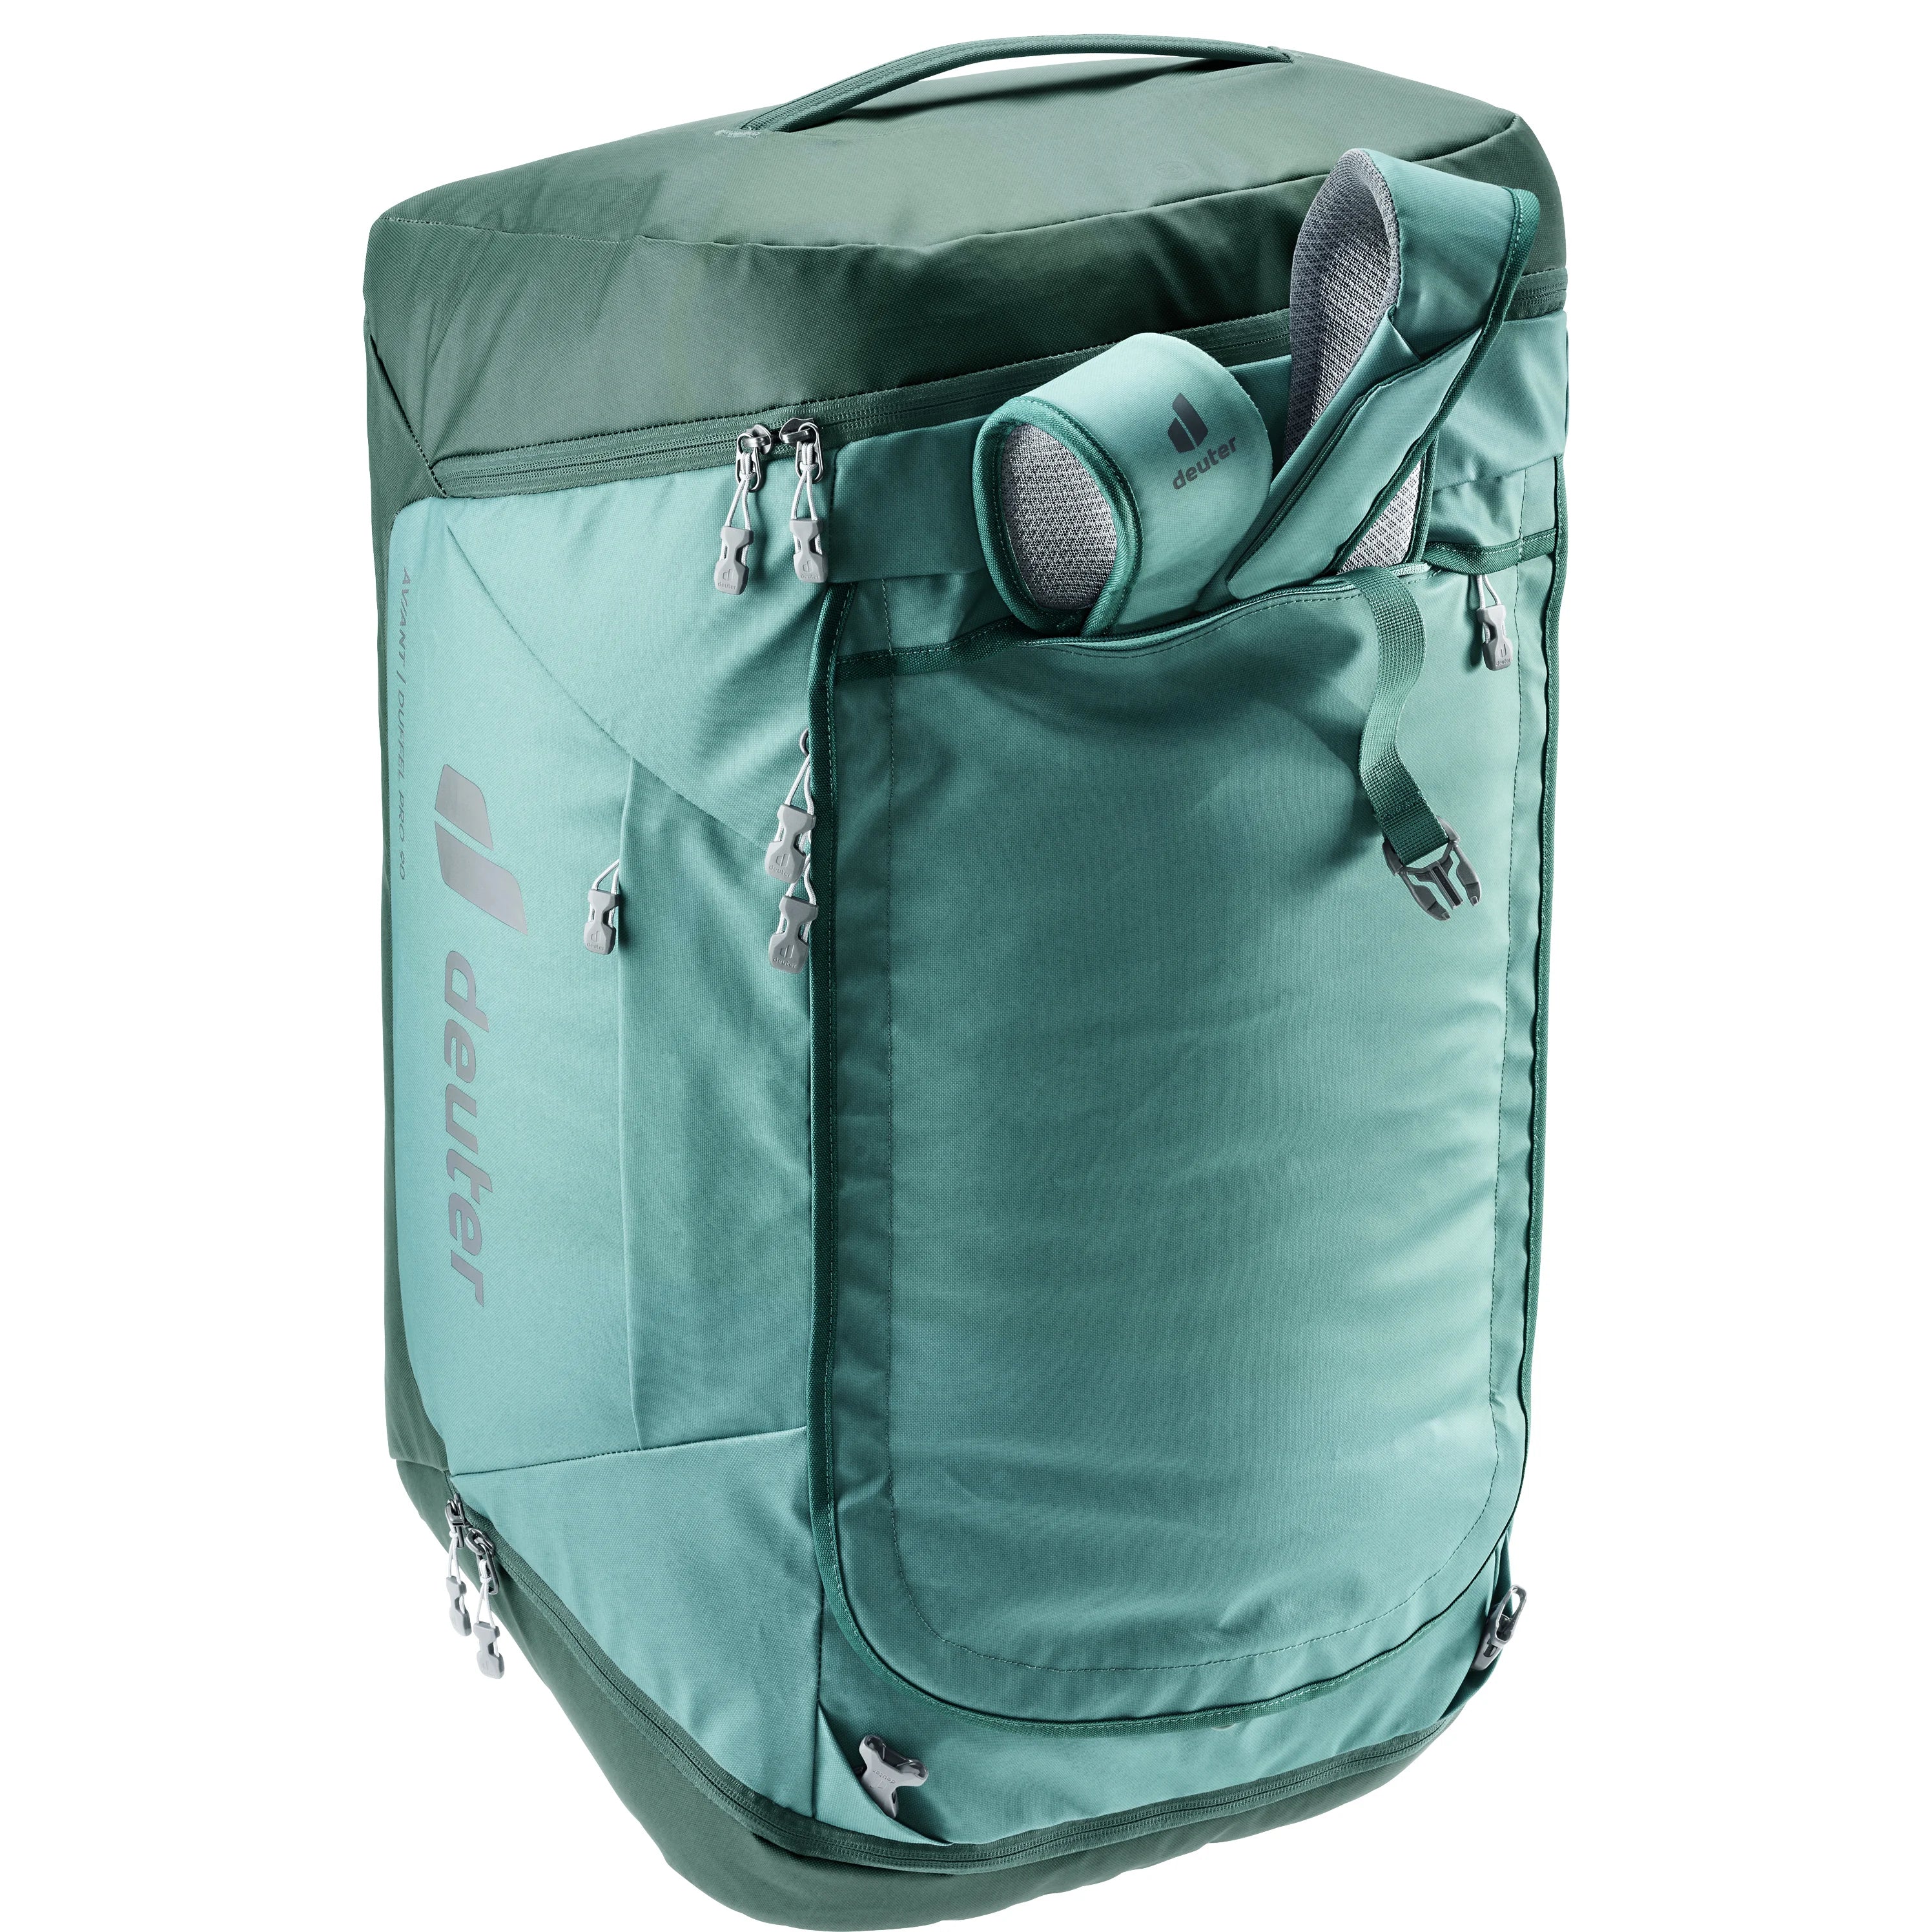 Deuter Travel Aviant Duffel Pro 90 sac de voyage 80 cm - jade-vert d'eau